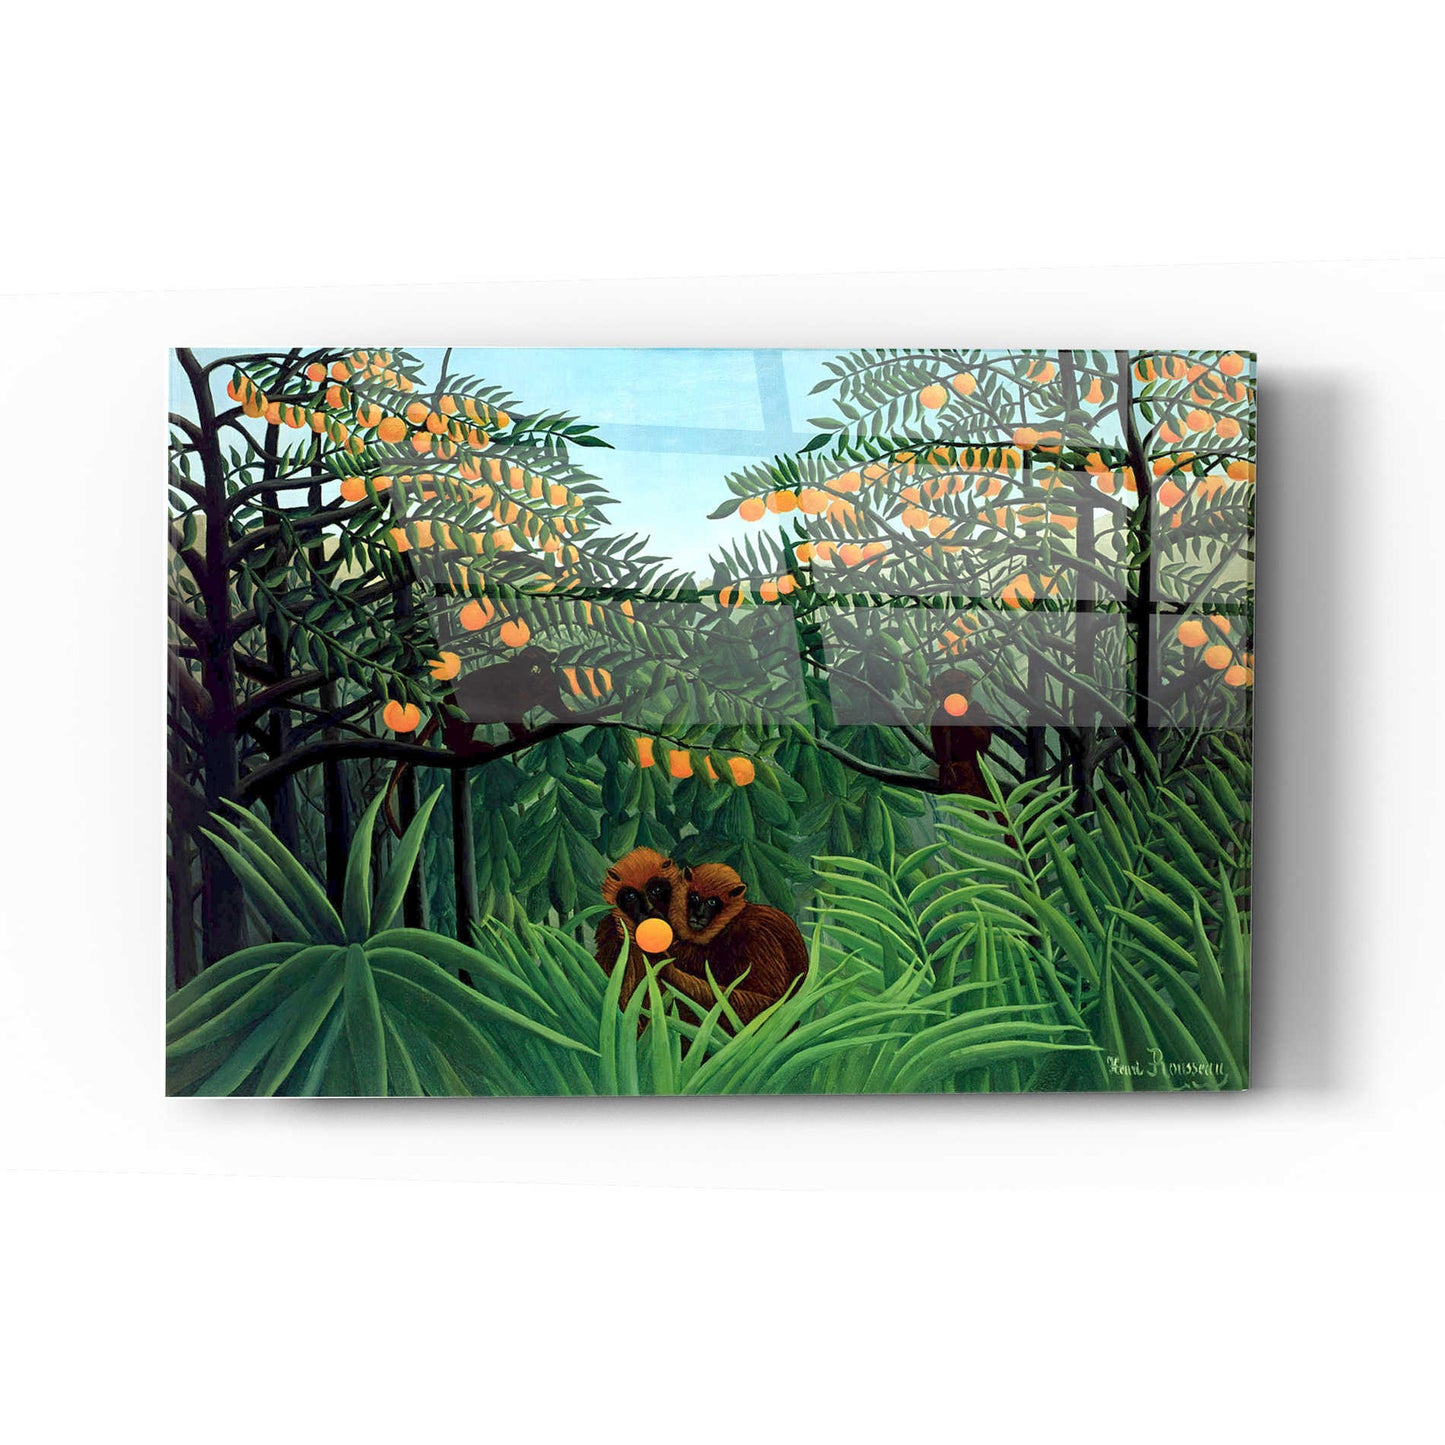 Epic Art 'The Tropics' by Henri Rousseau Acrylic Glass Wall Art,12x16